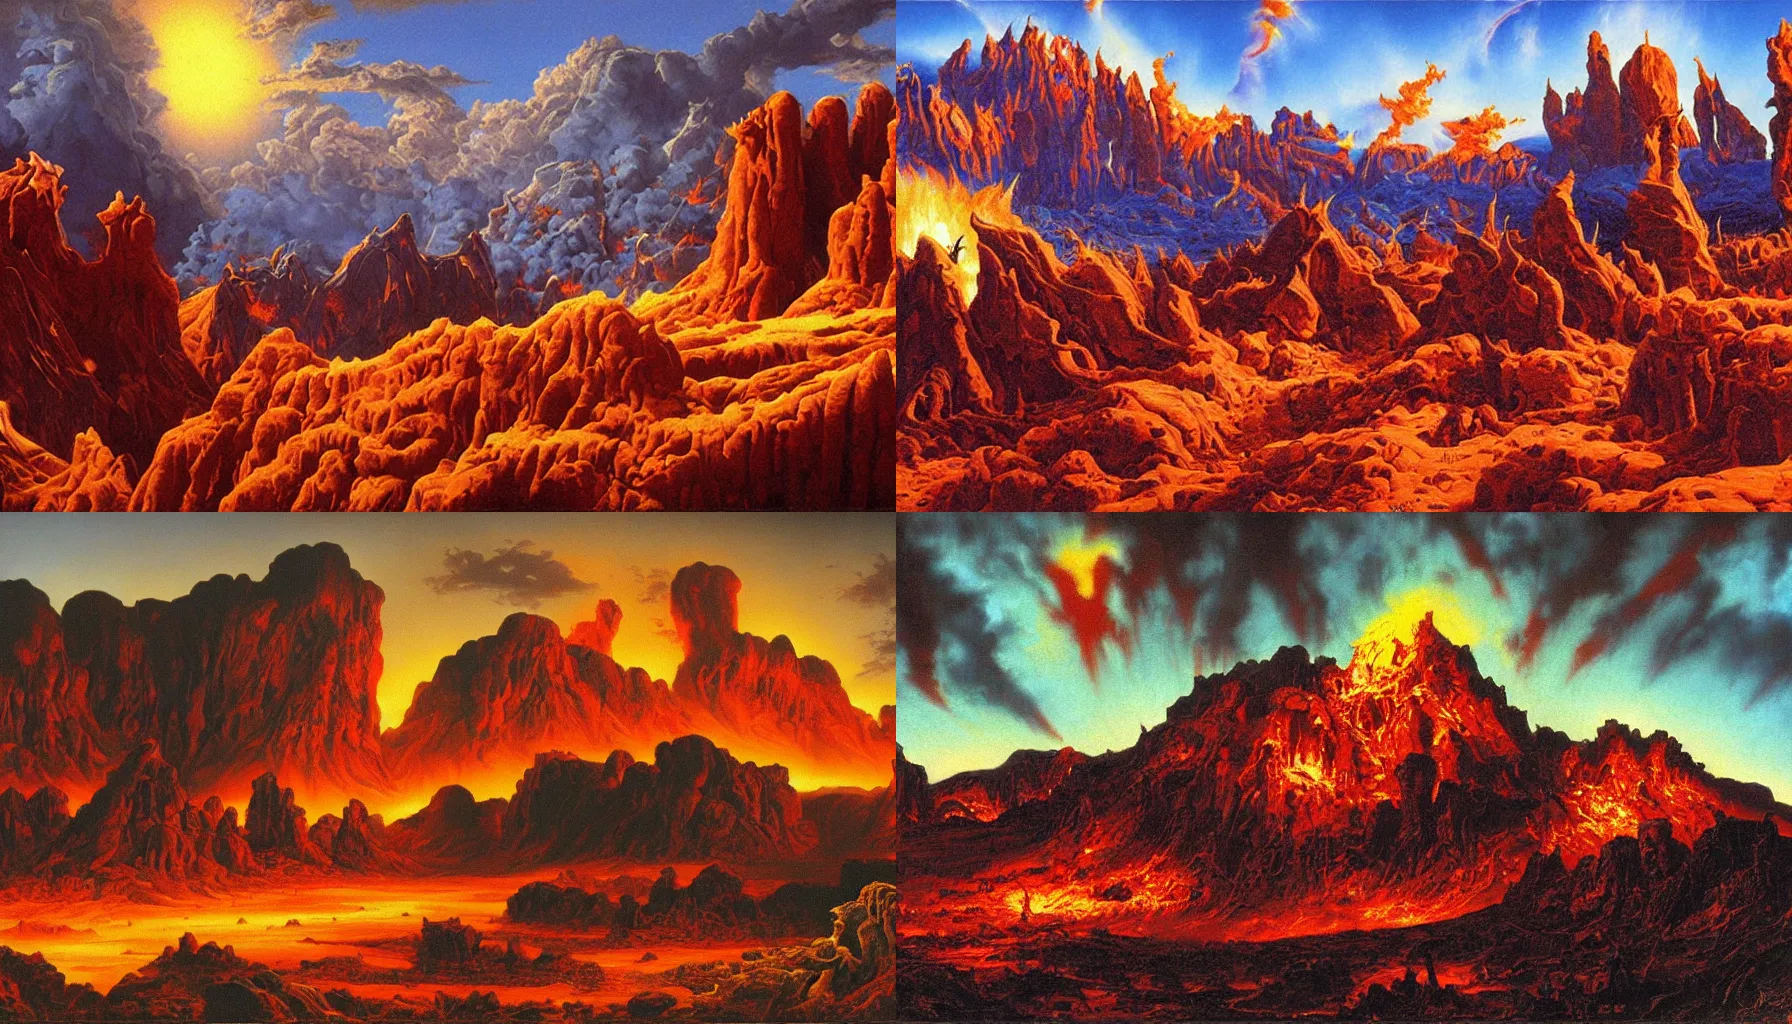 Prompt: hellish landscape by brothers hildebrandt, masterpiece, detailed